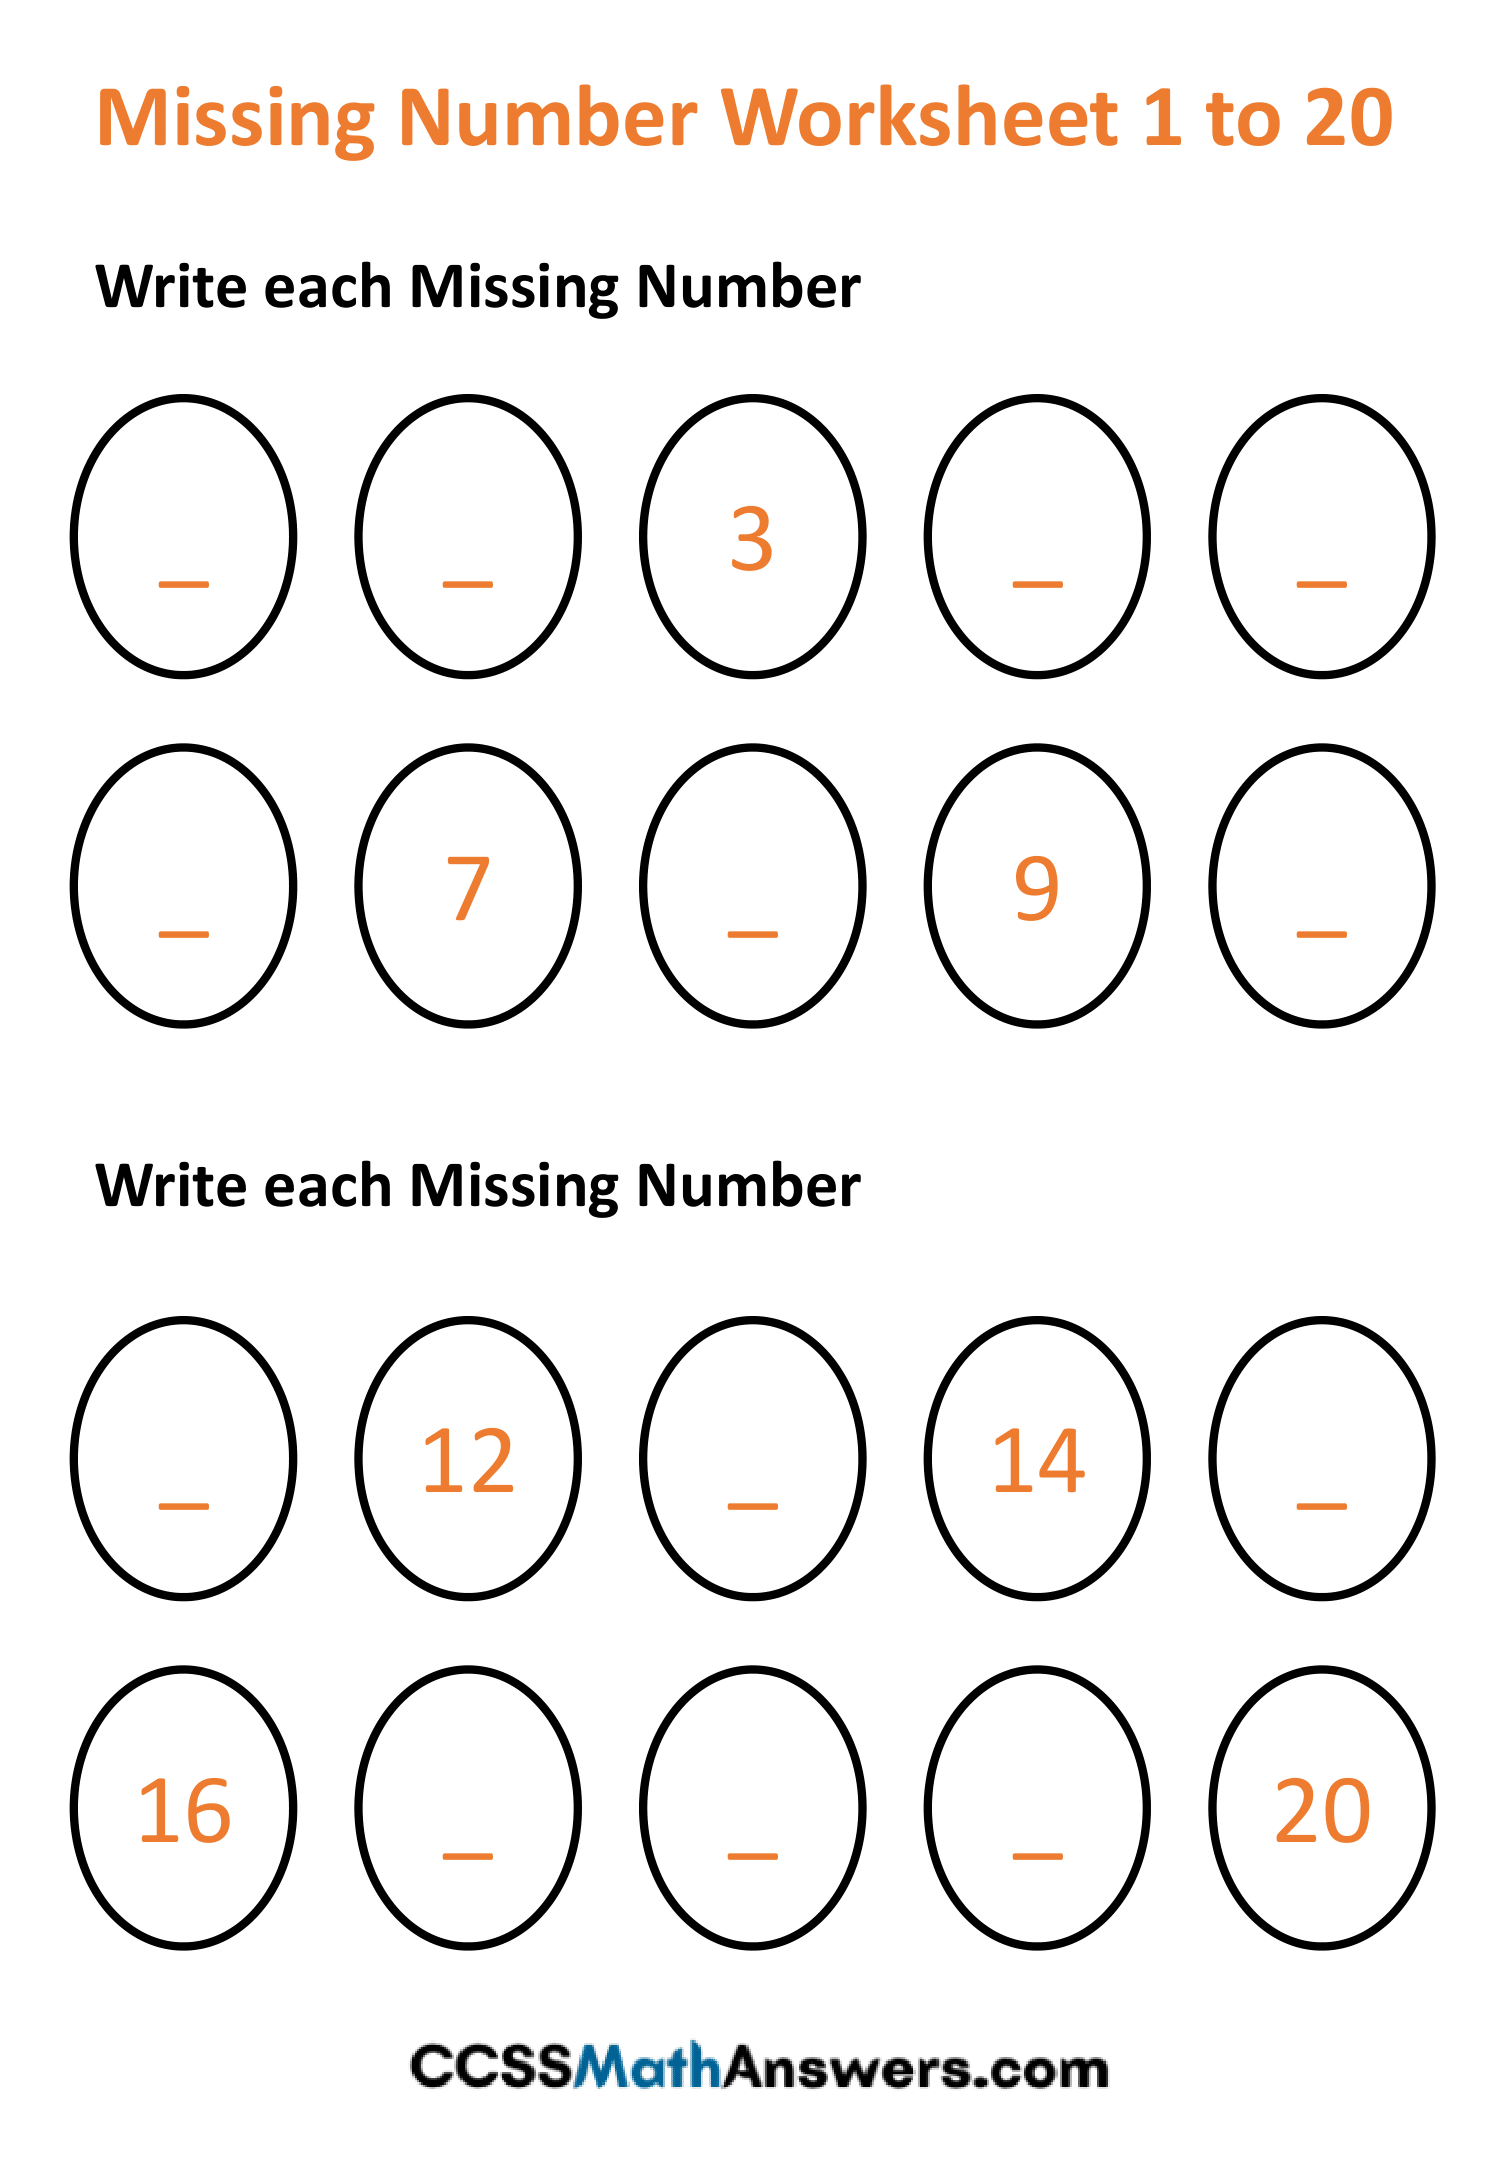 Missing Number Worksheets 1 to 20